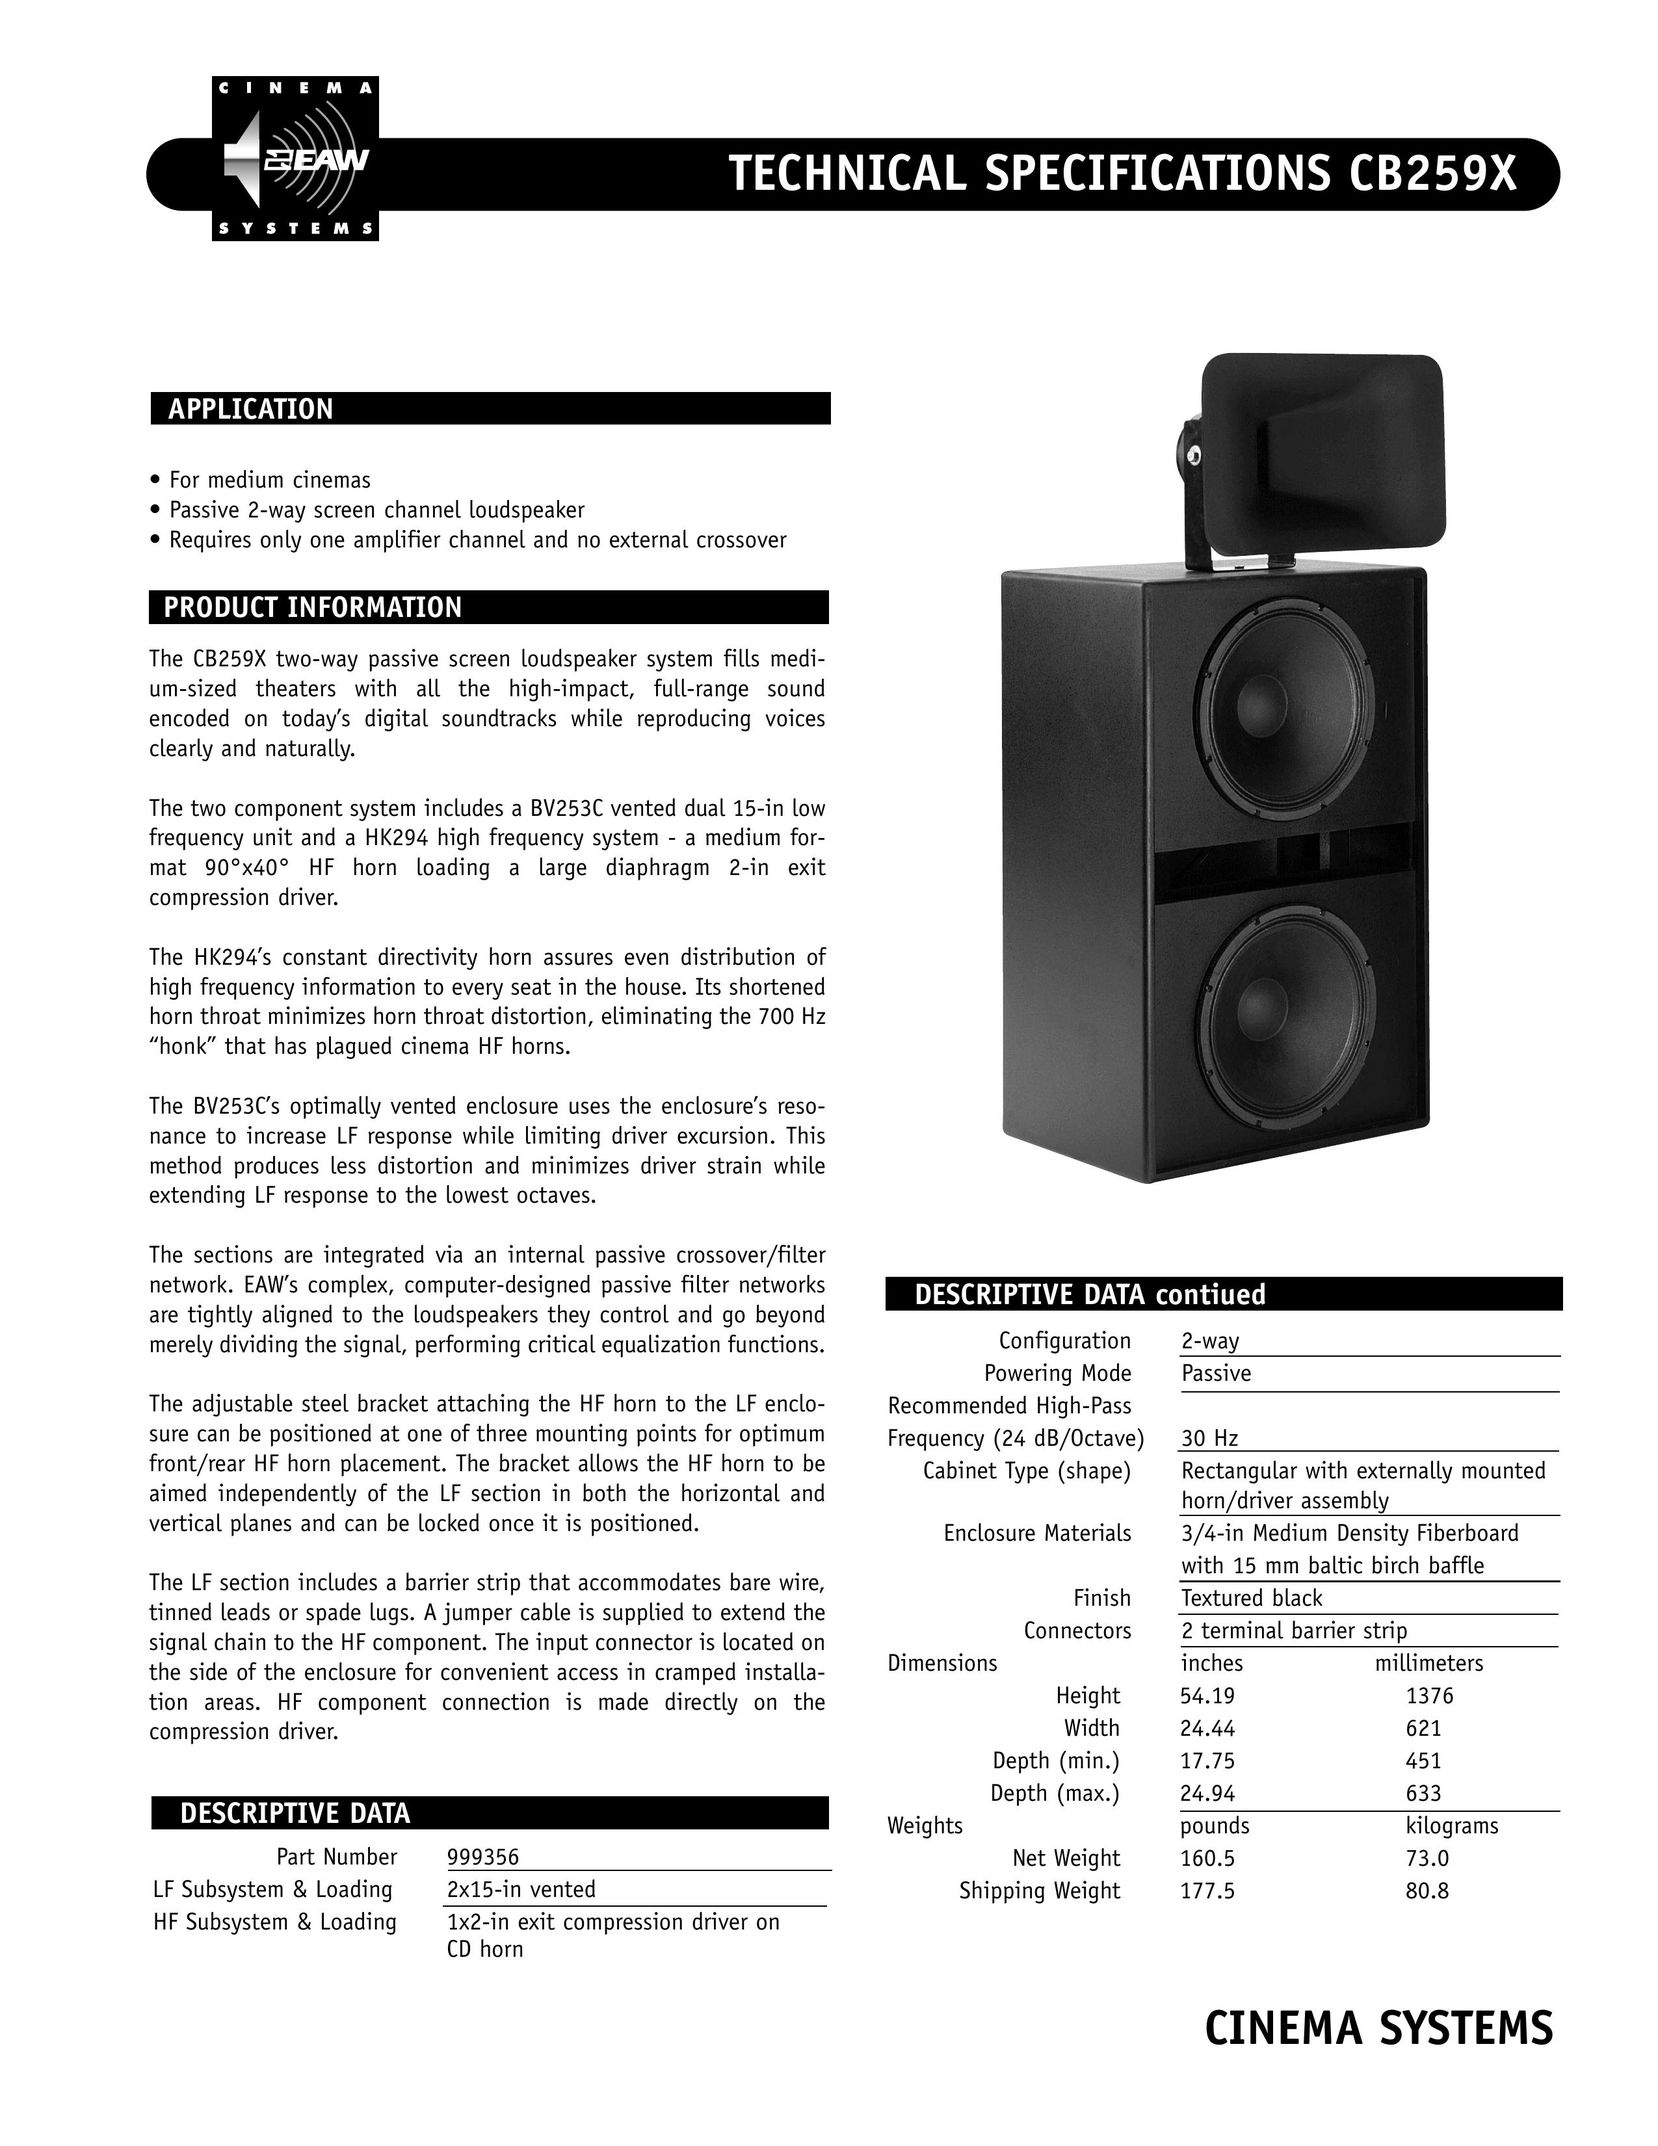 EAW CB259X Speaker System User Manual